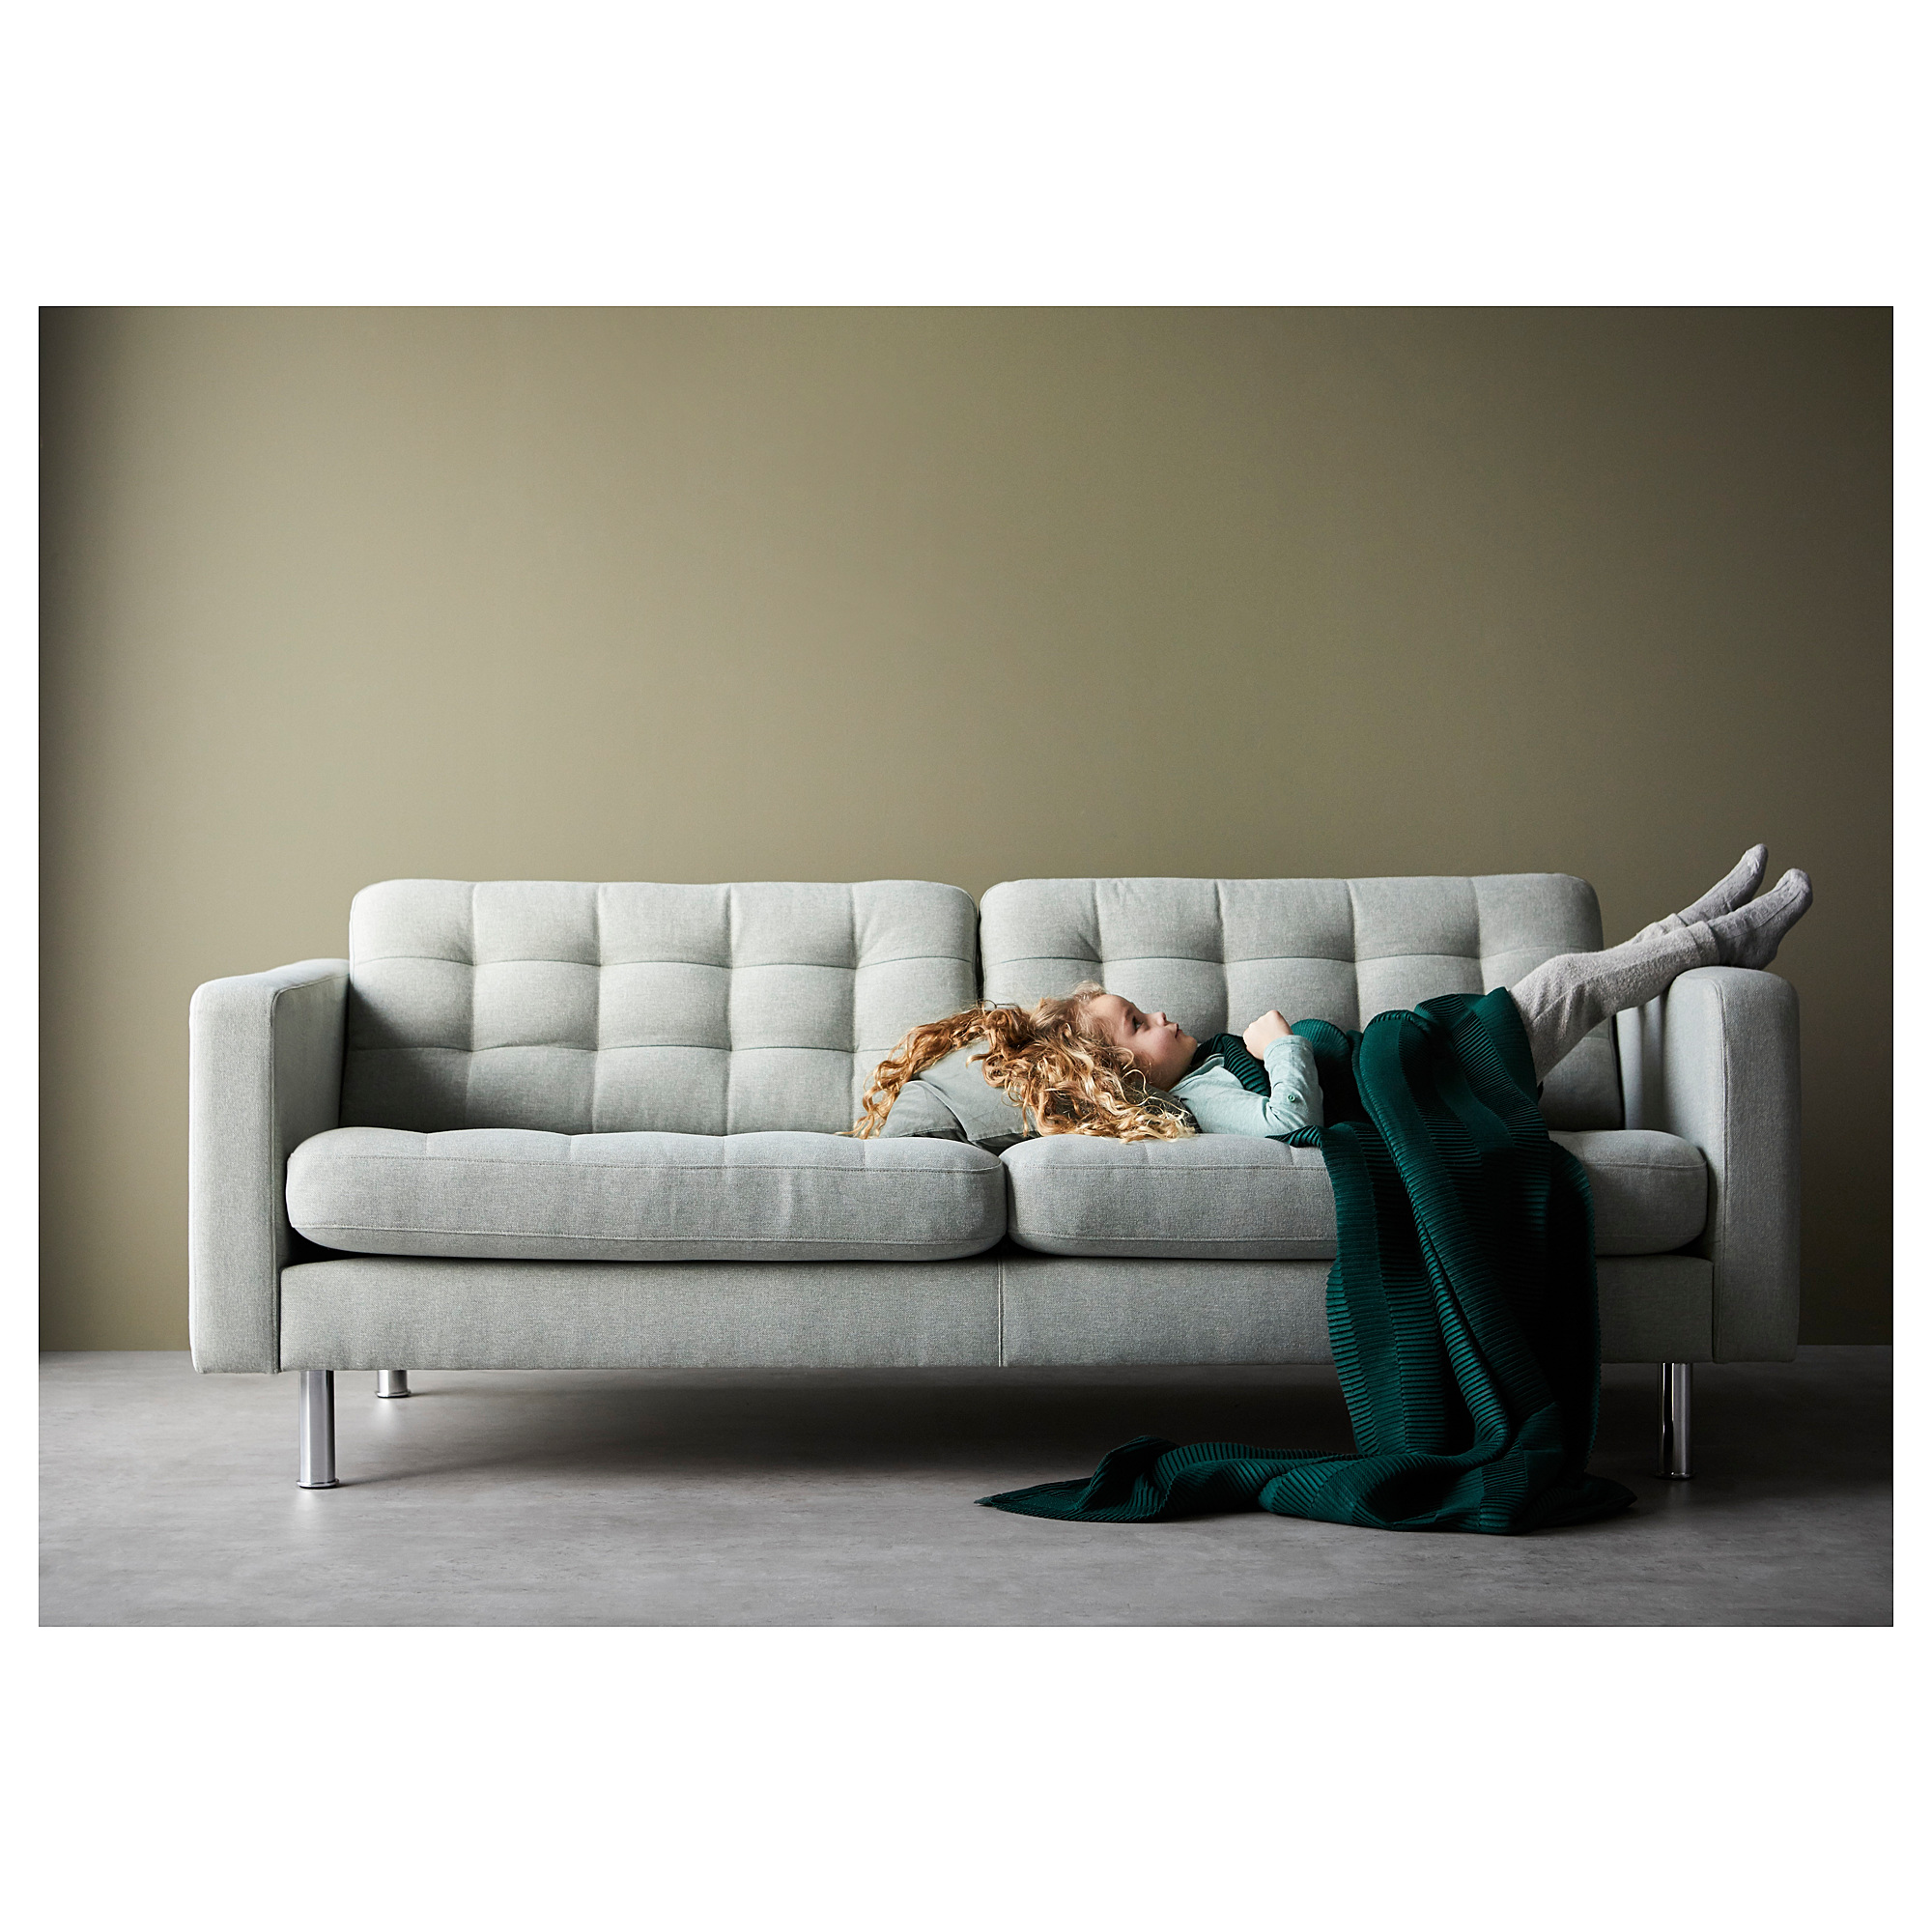 LANDSKRONA 3-seat sofa